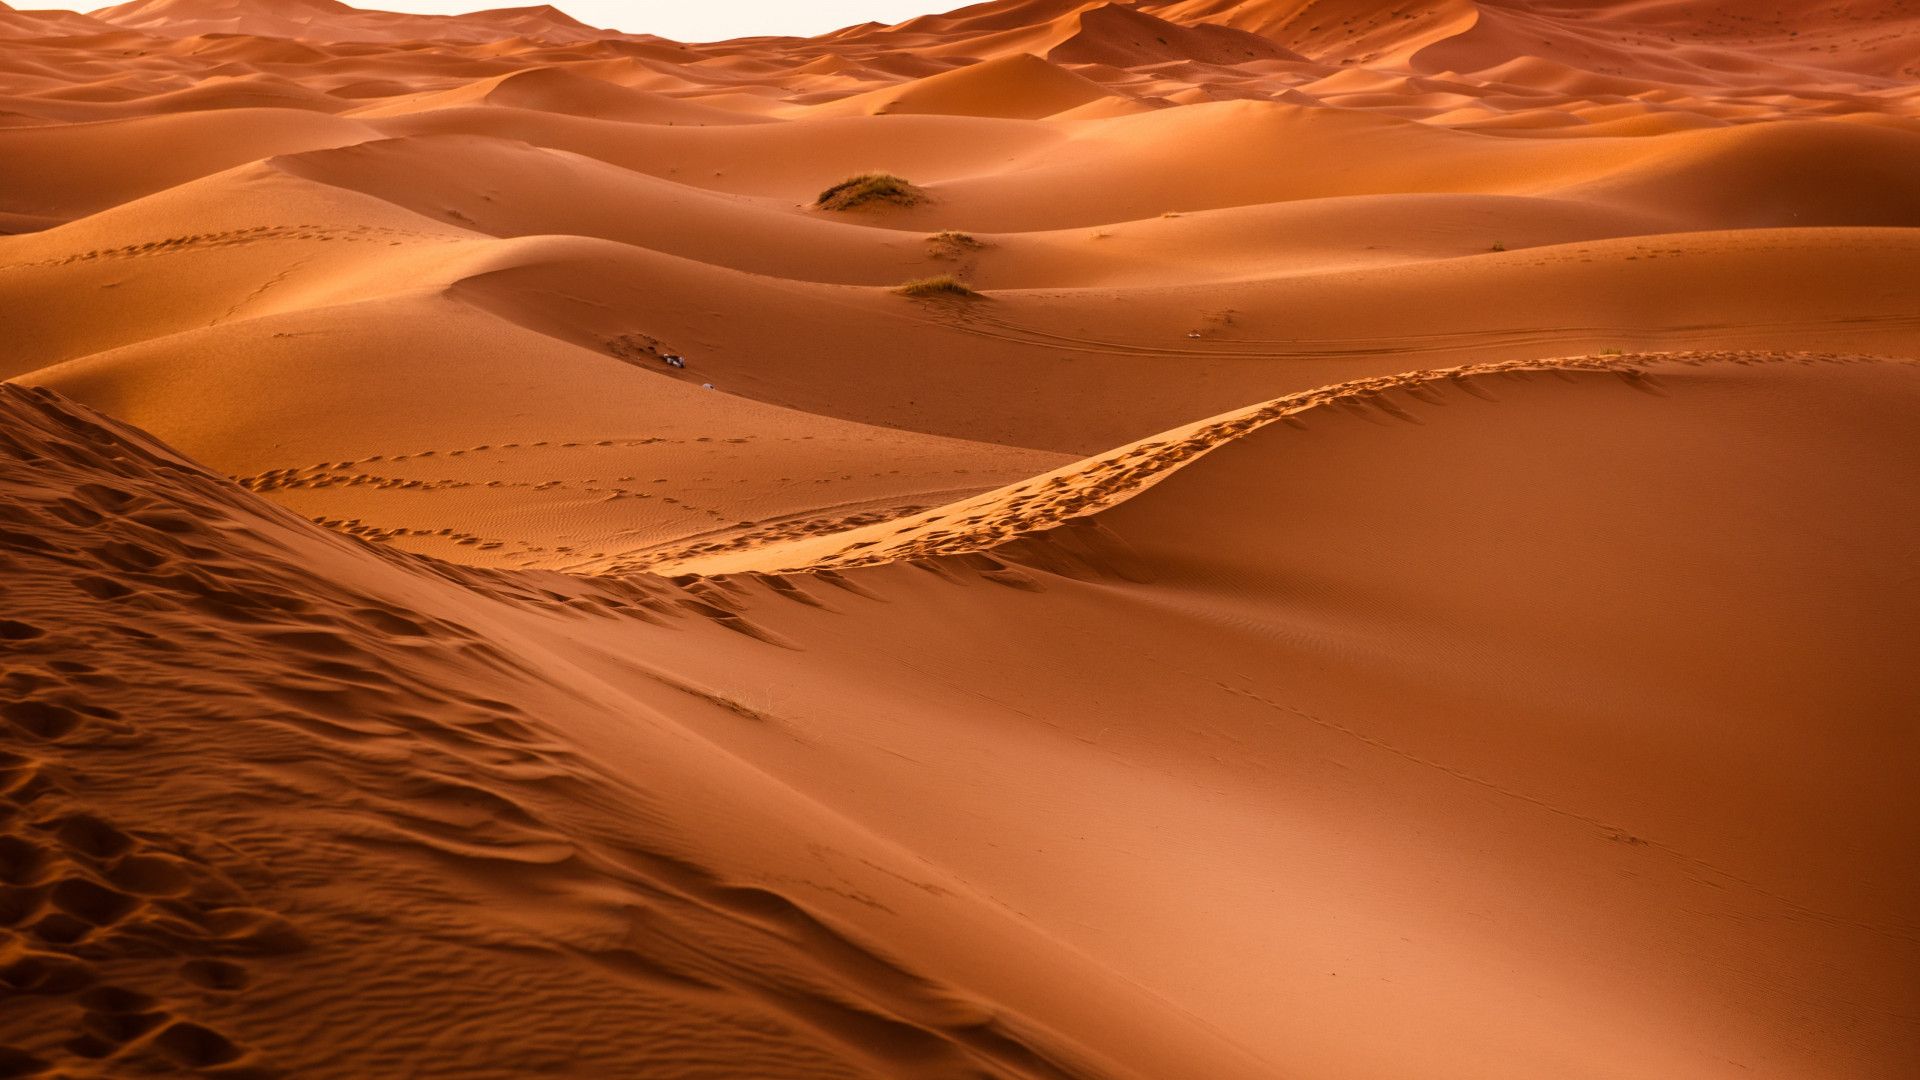 Download wallpaper: Sahara Desert 1920x1080